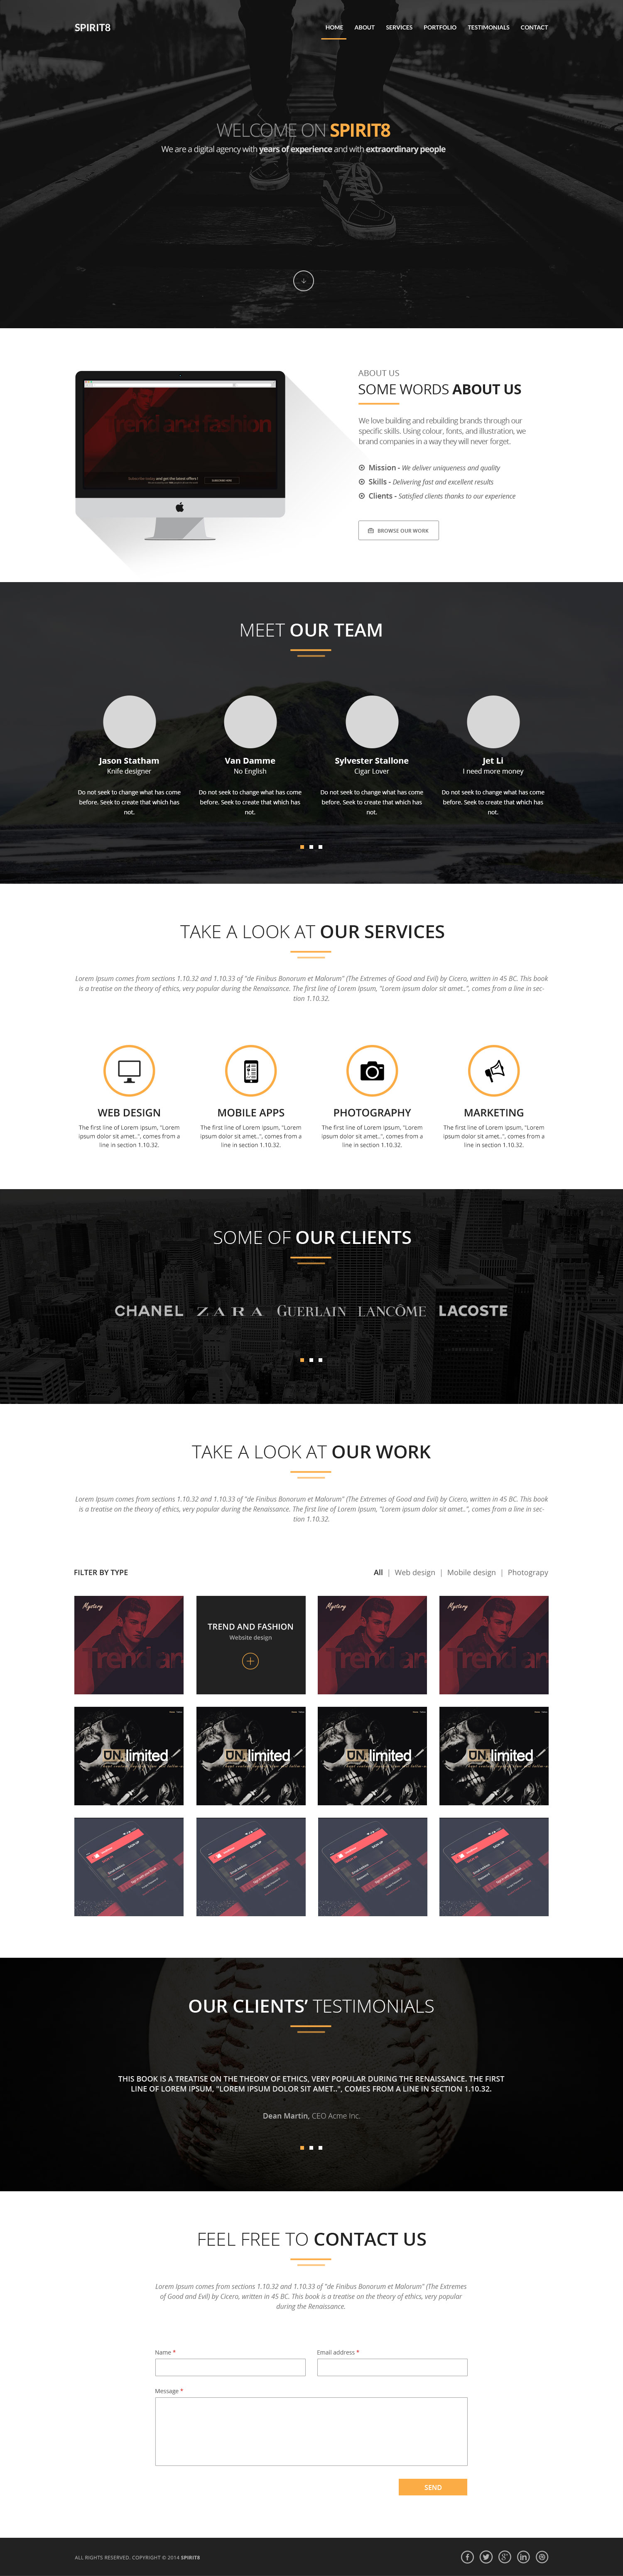 Spirit8 - Digital Agency One Page Web Template PSD